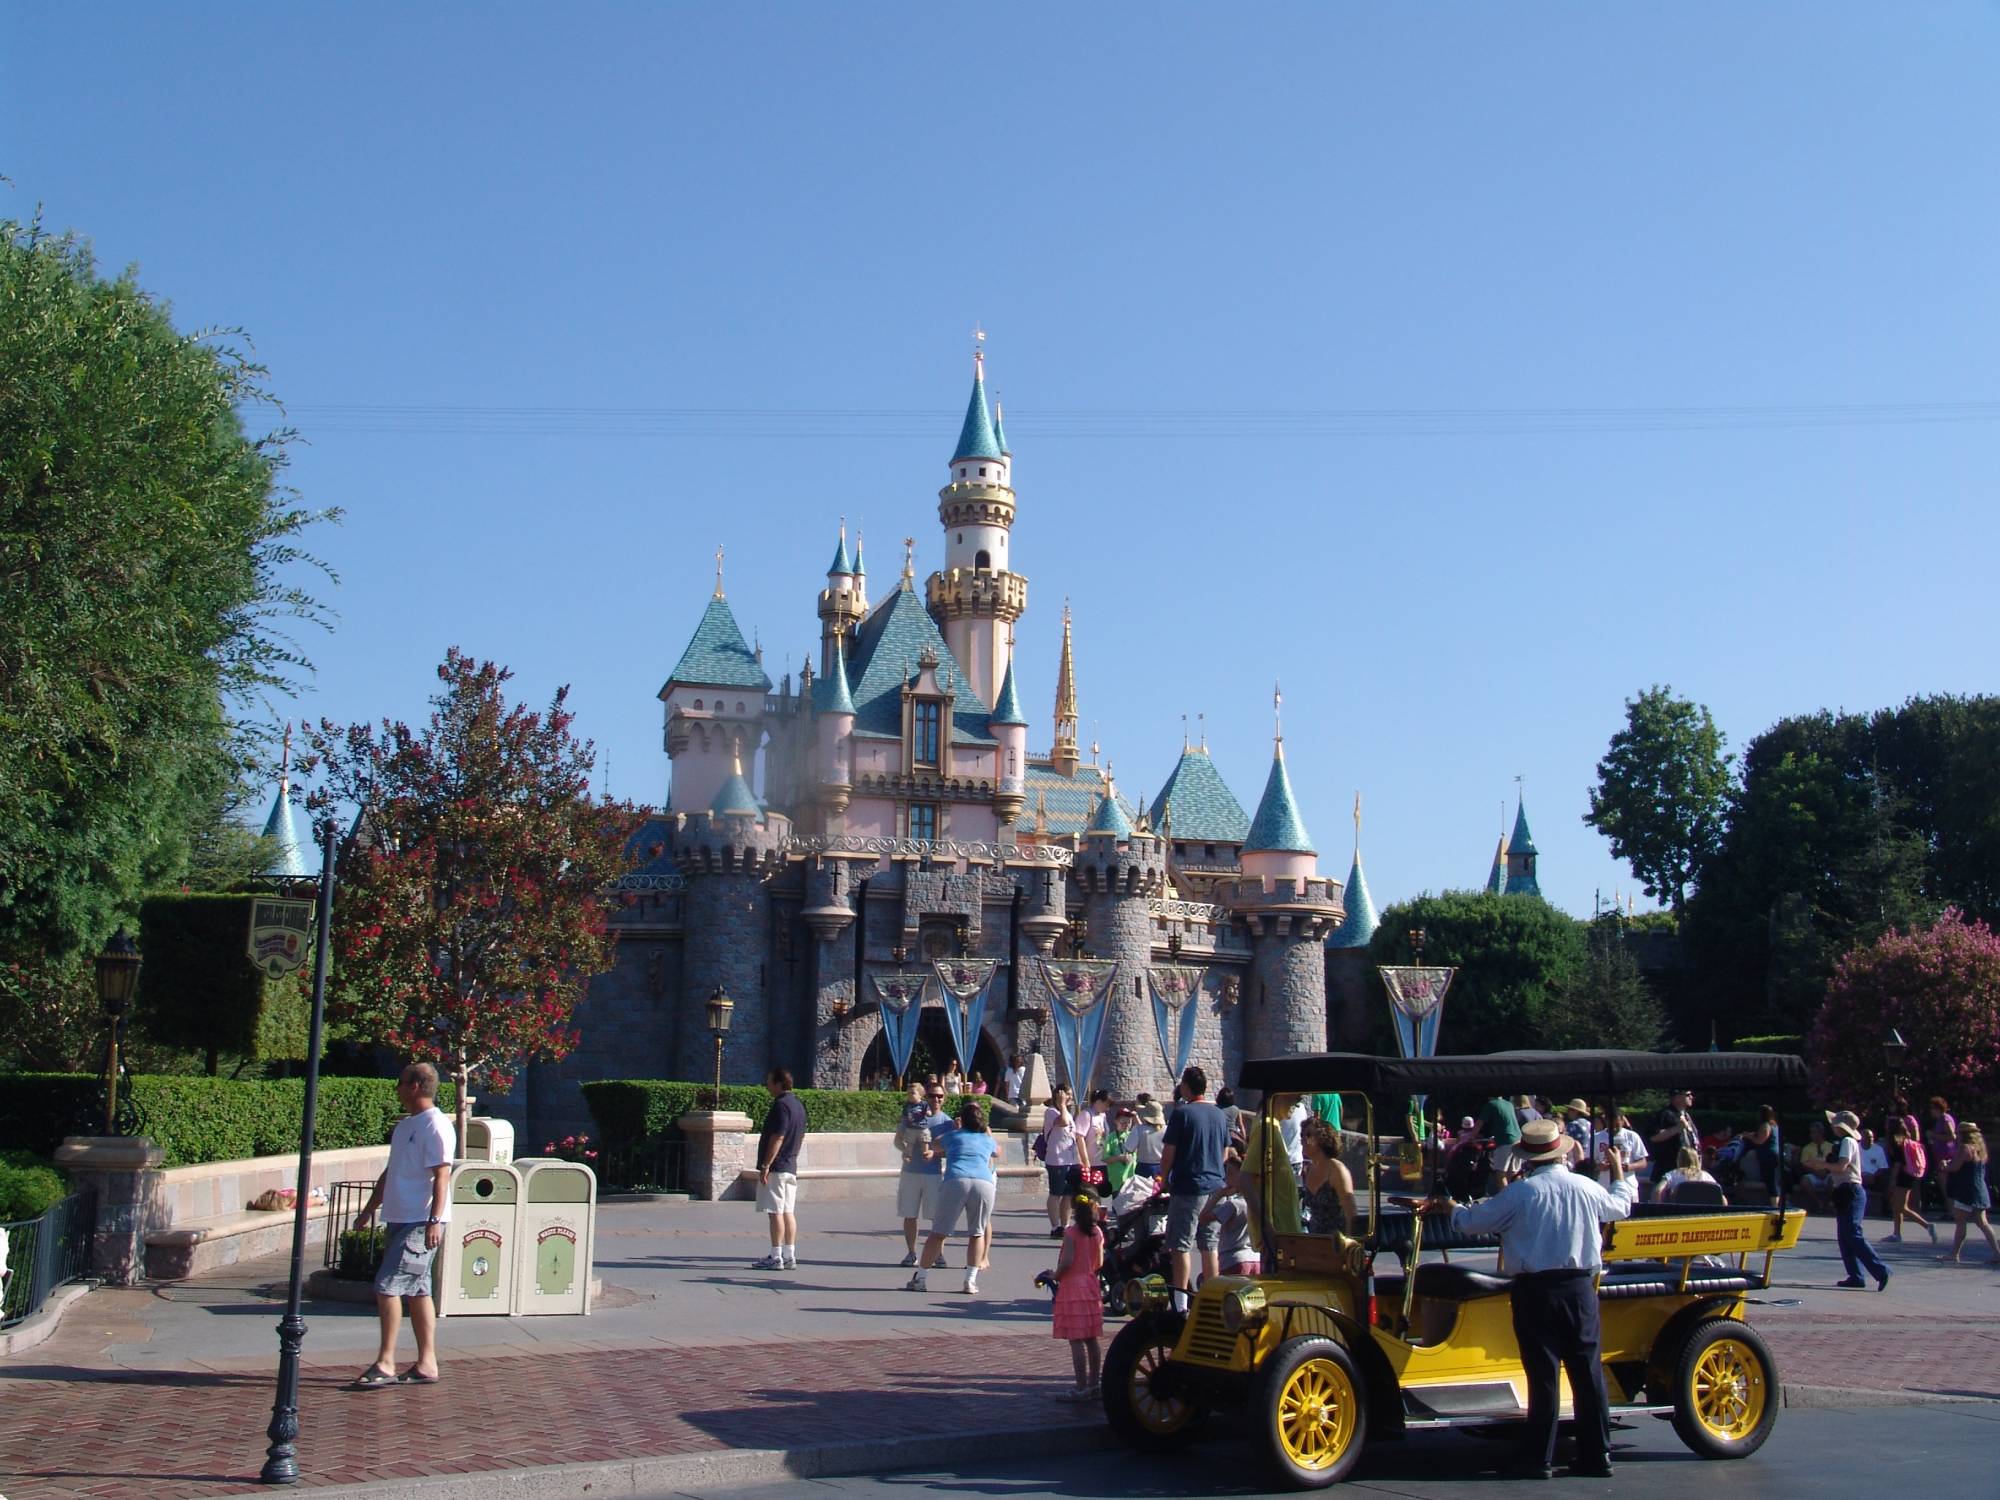 Disneyland Park - Sleeping Beauty Castle